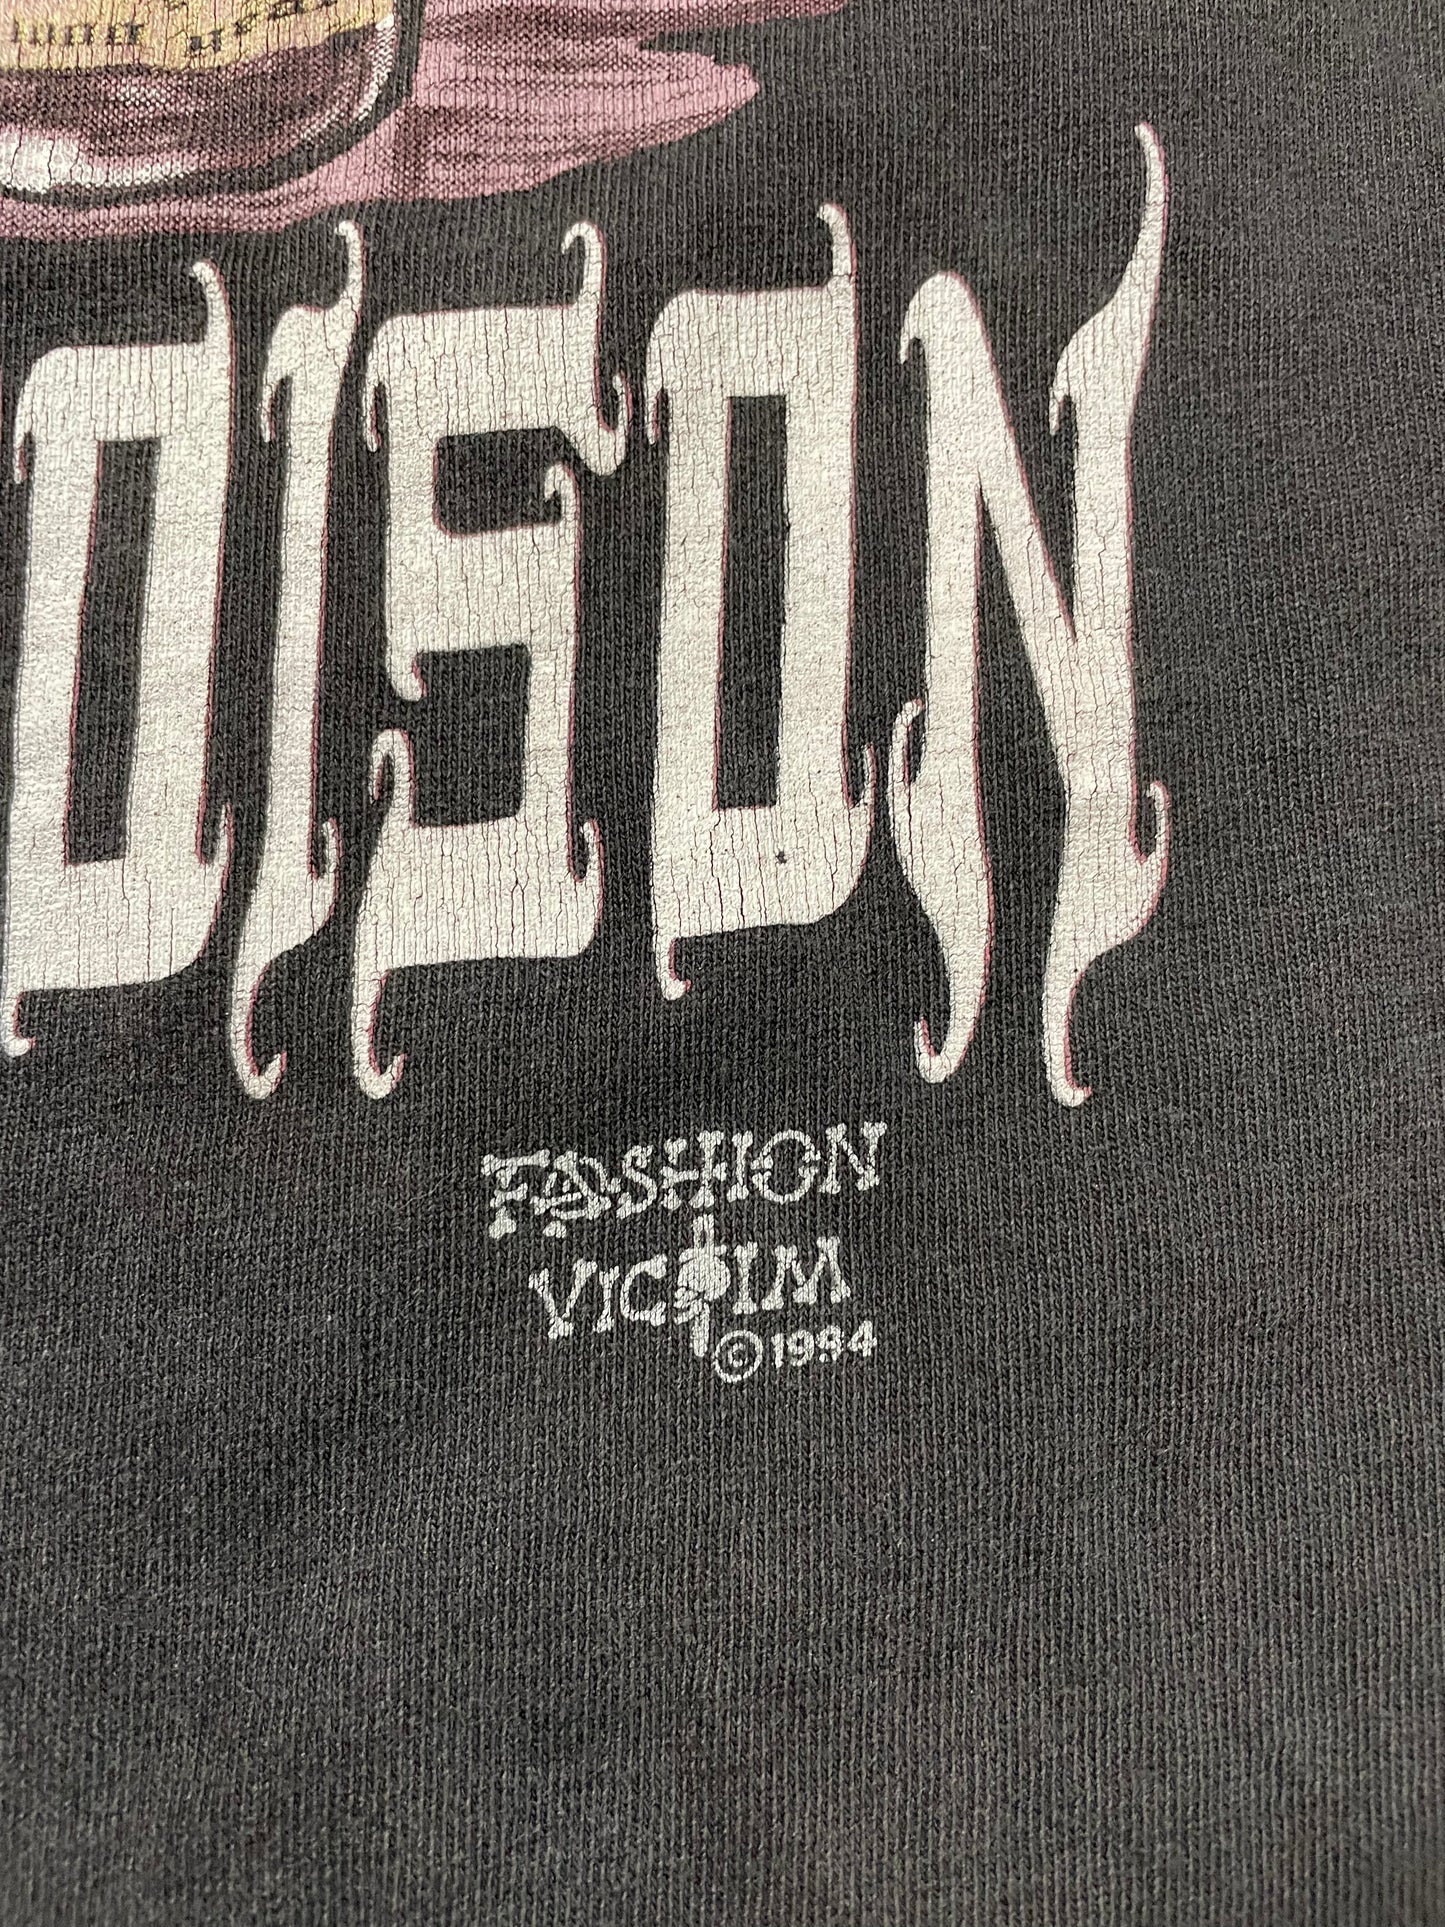 1994 Fashion Victim ‘Poison’ Tee